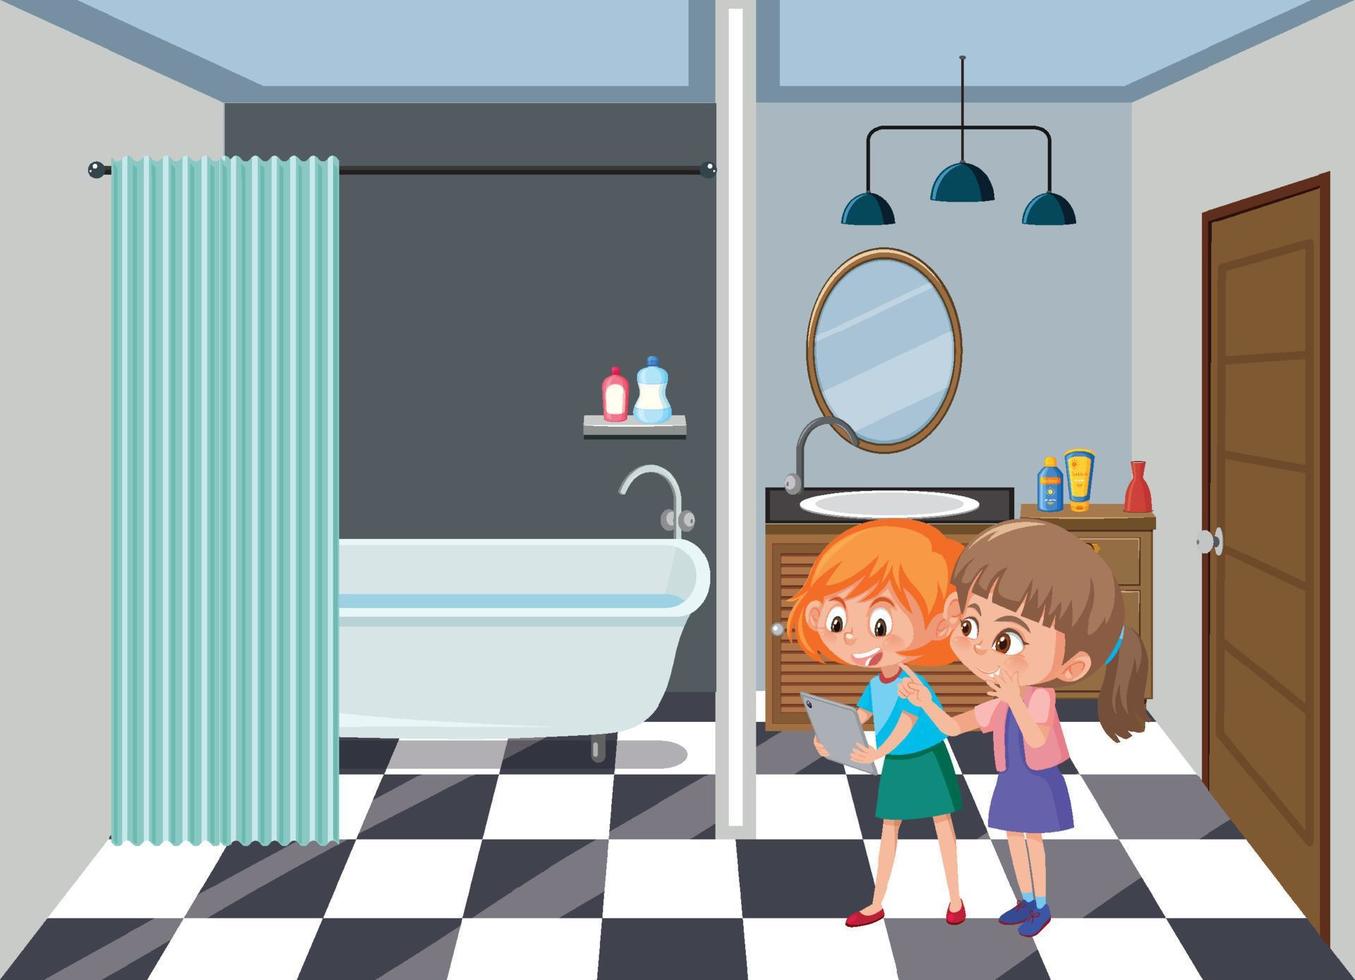 Bathroom scene with family members cartoon character vector